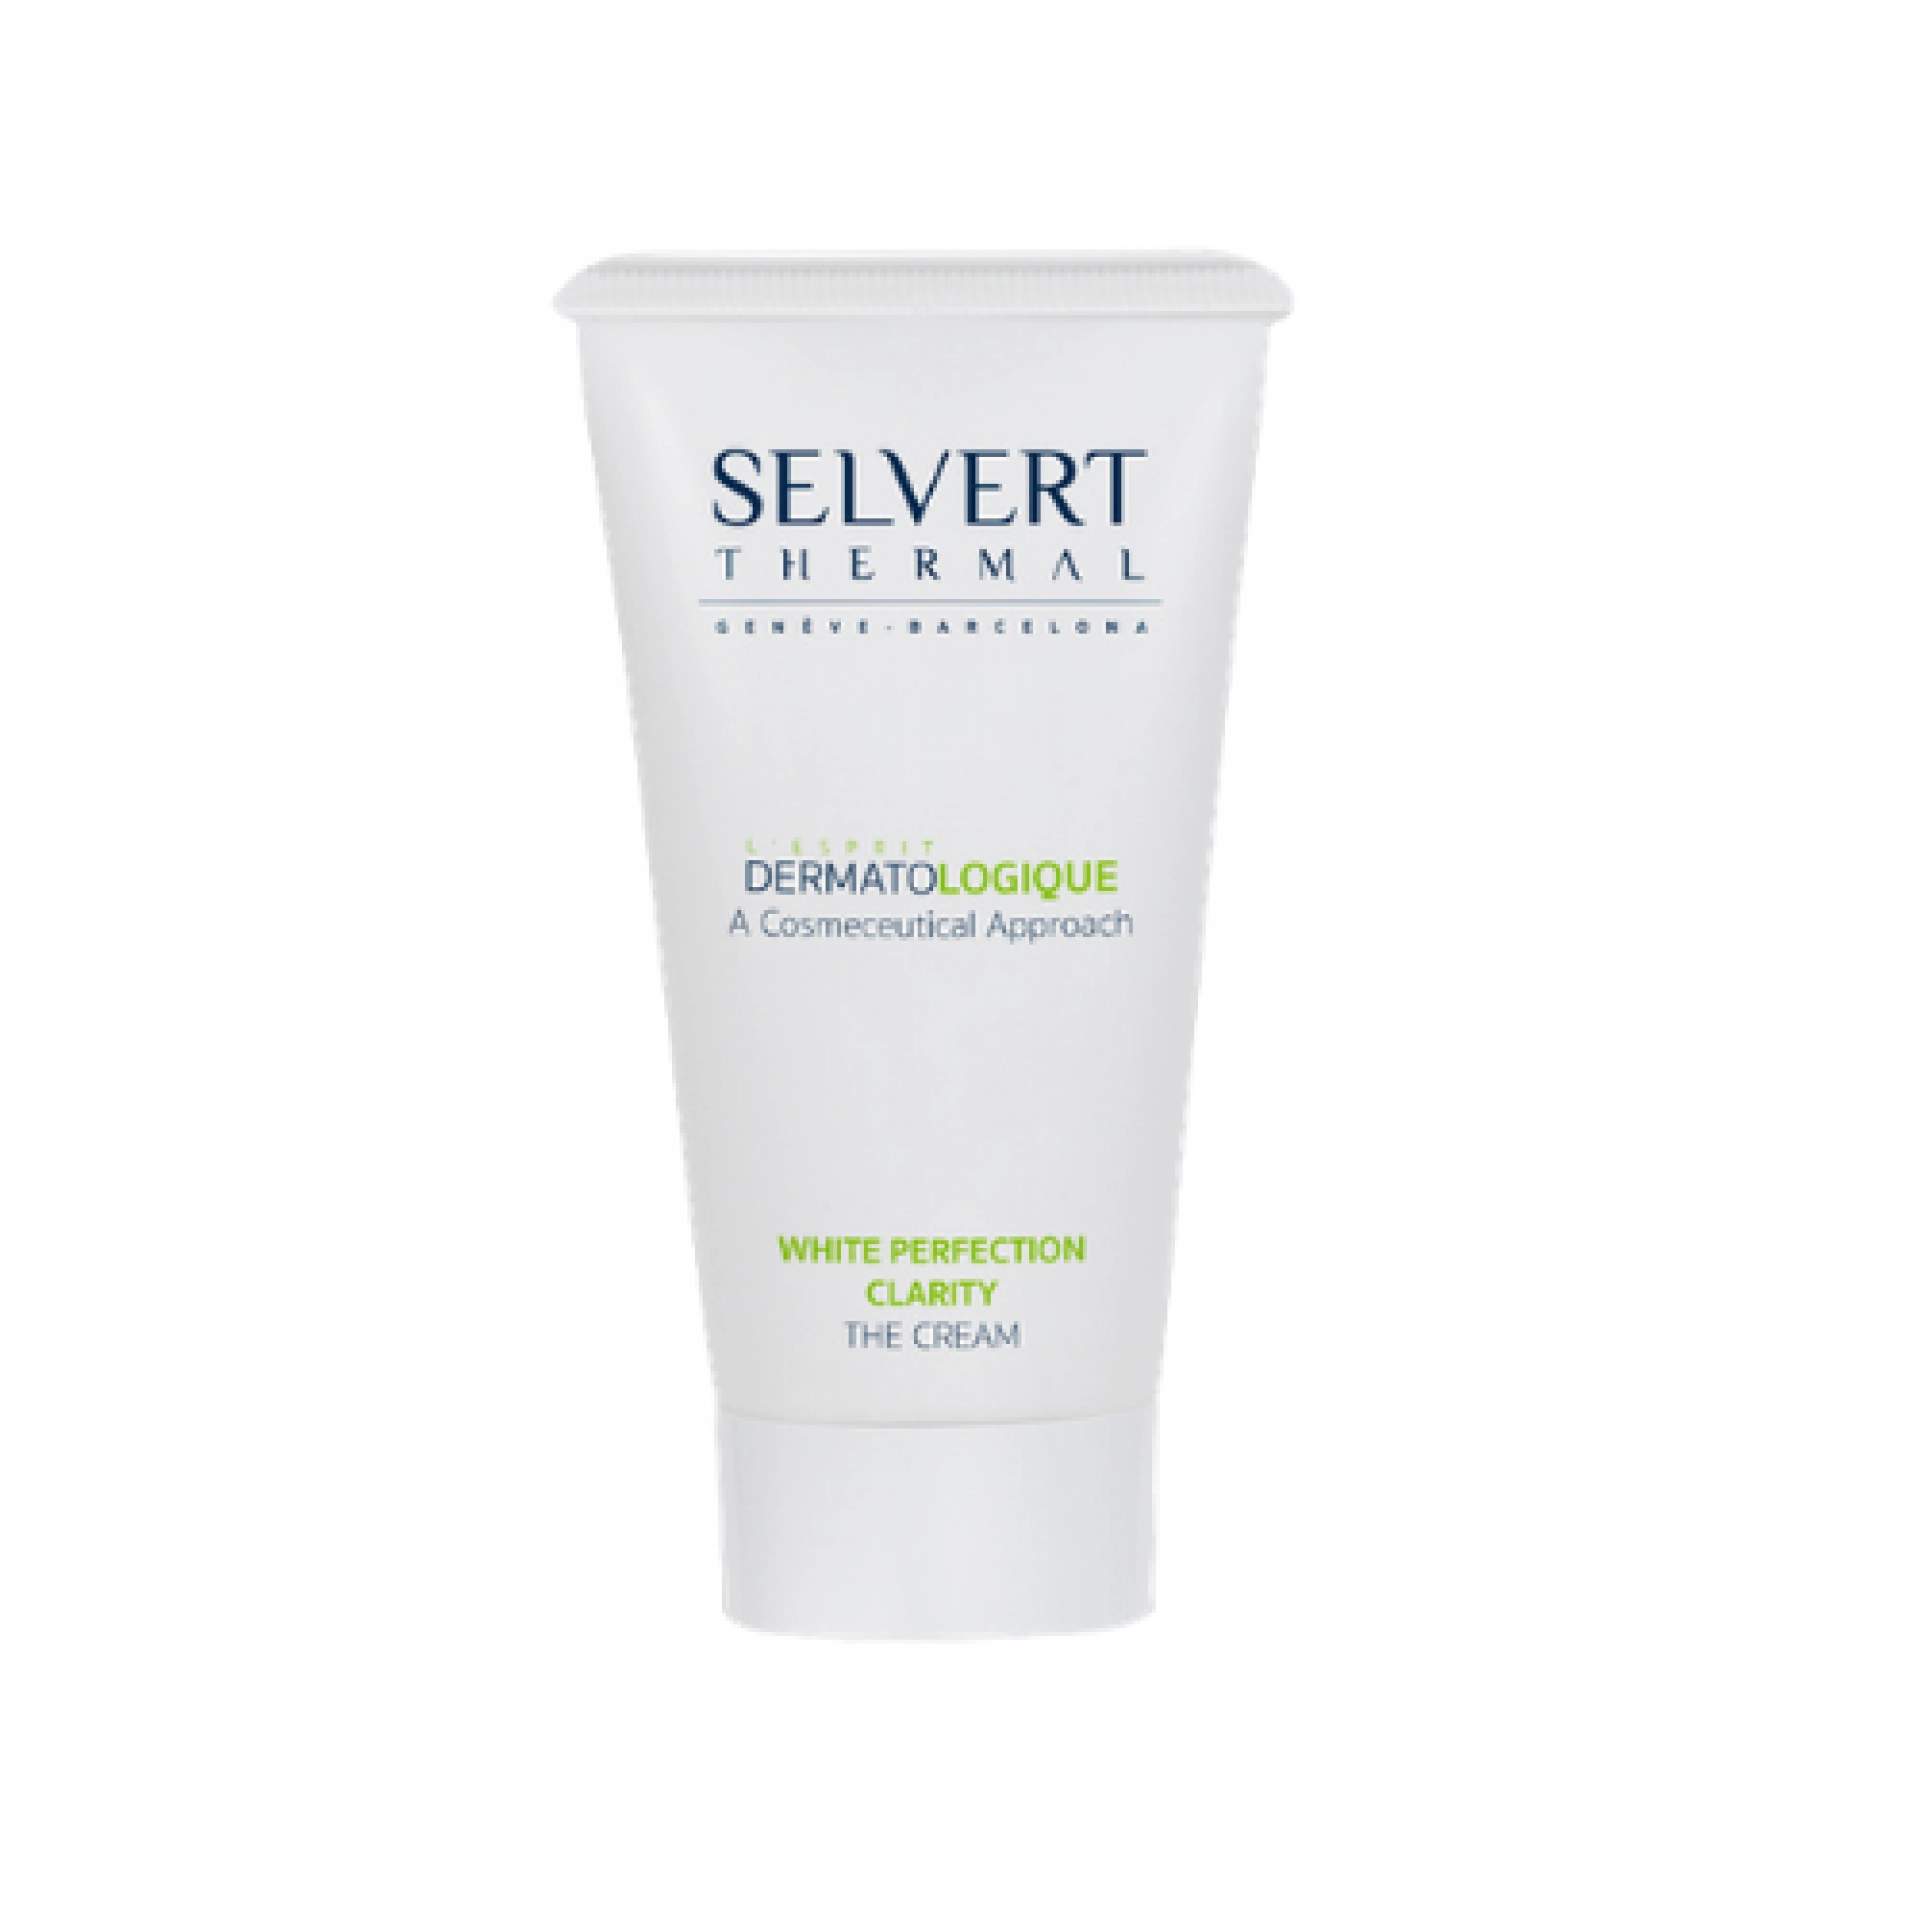 L´Esprit Dermatologique White Perfection Clarity - The Cream 50ml Selvert Thermal®